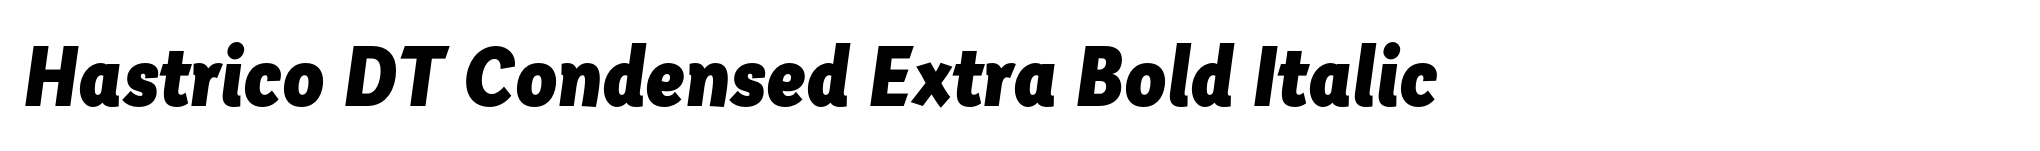 Hastrico DT Condensed Extra Bold Italic image